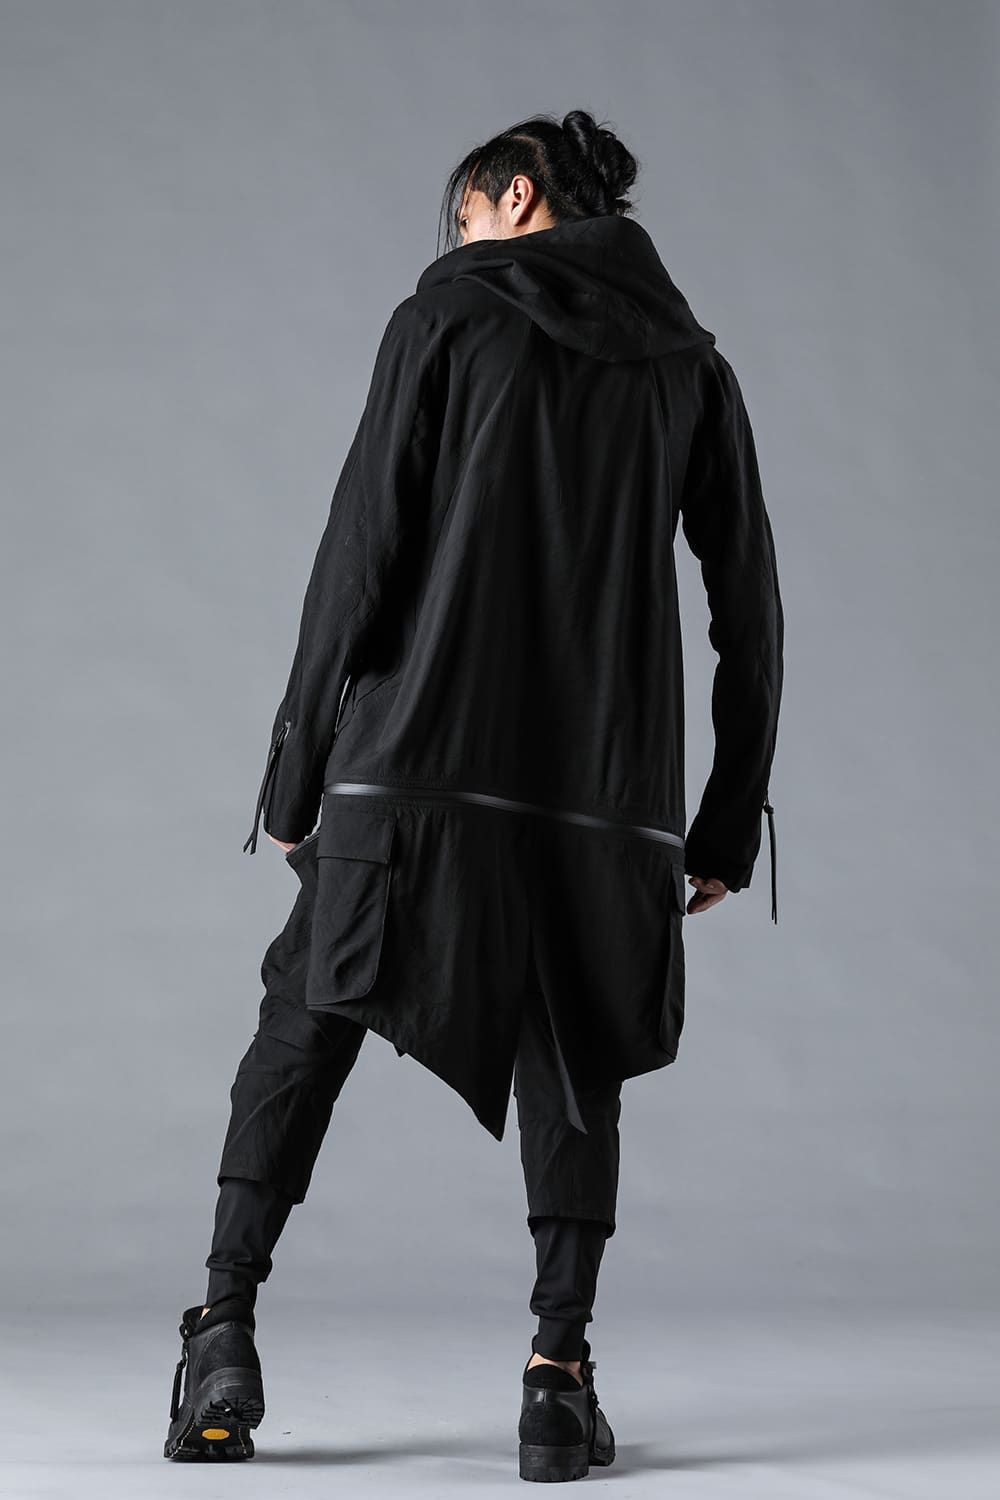 Salt-Shrunk Washed Dobby Striped Military Coat "Black"/塩縮ワッシャードビーボーダーミリタリーコート"ブラック"